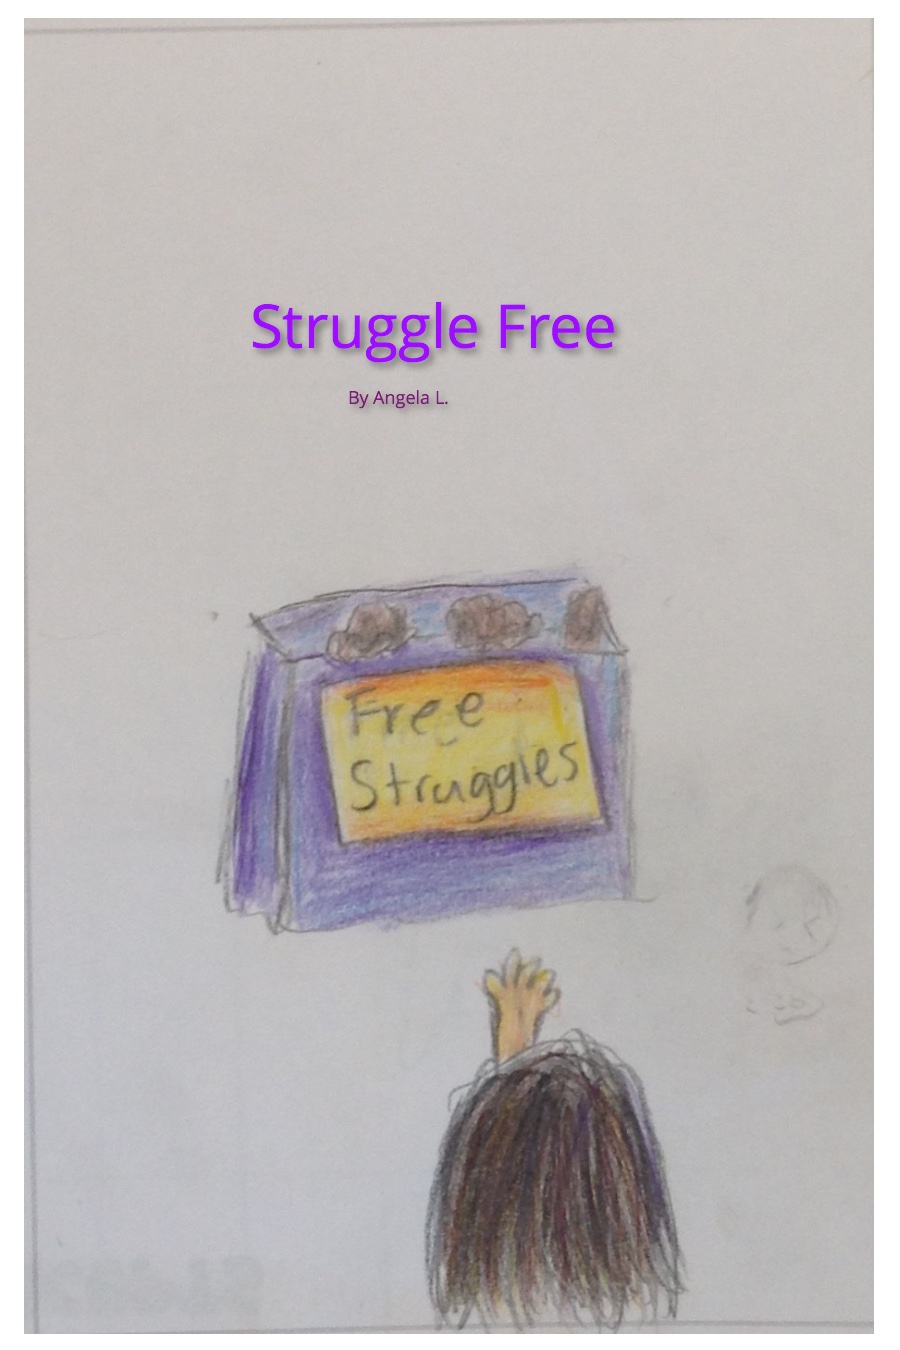 Struggle Free by Angela L